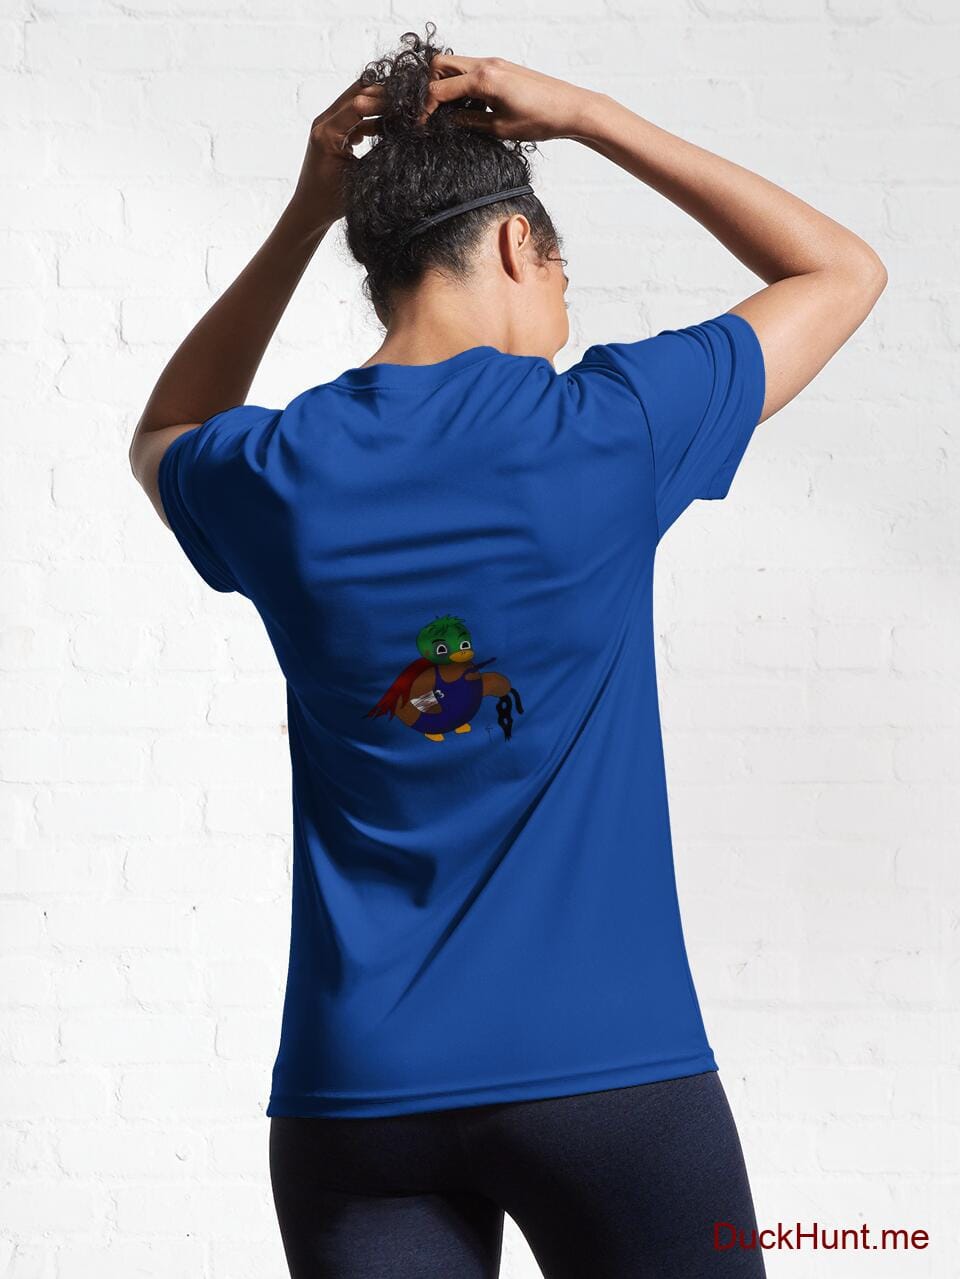 Dead DuckHunt Boss (smokeless) Royal Blue Active T-Shirt (Back printed) alternative image 5